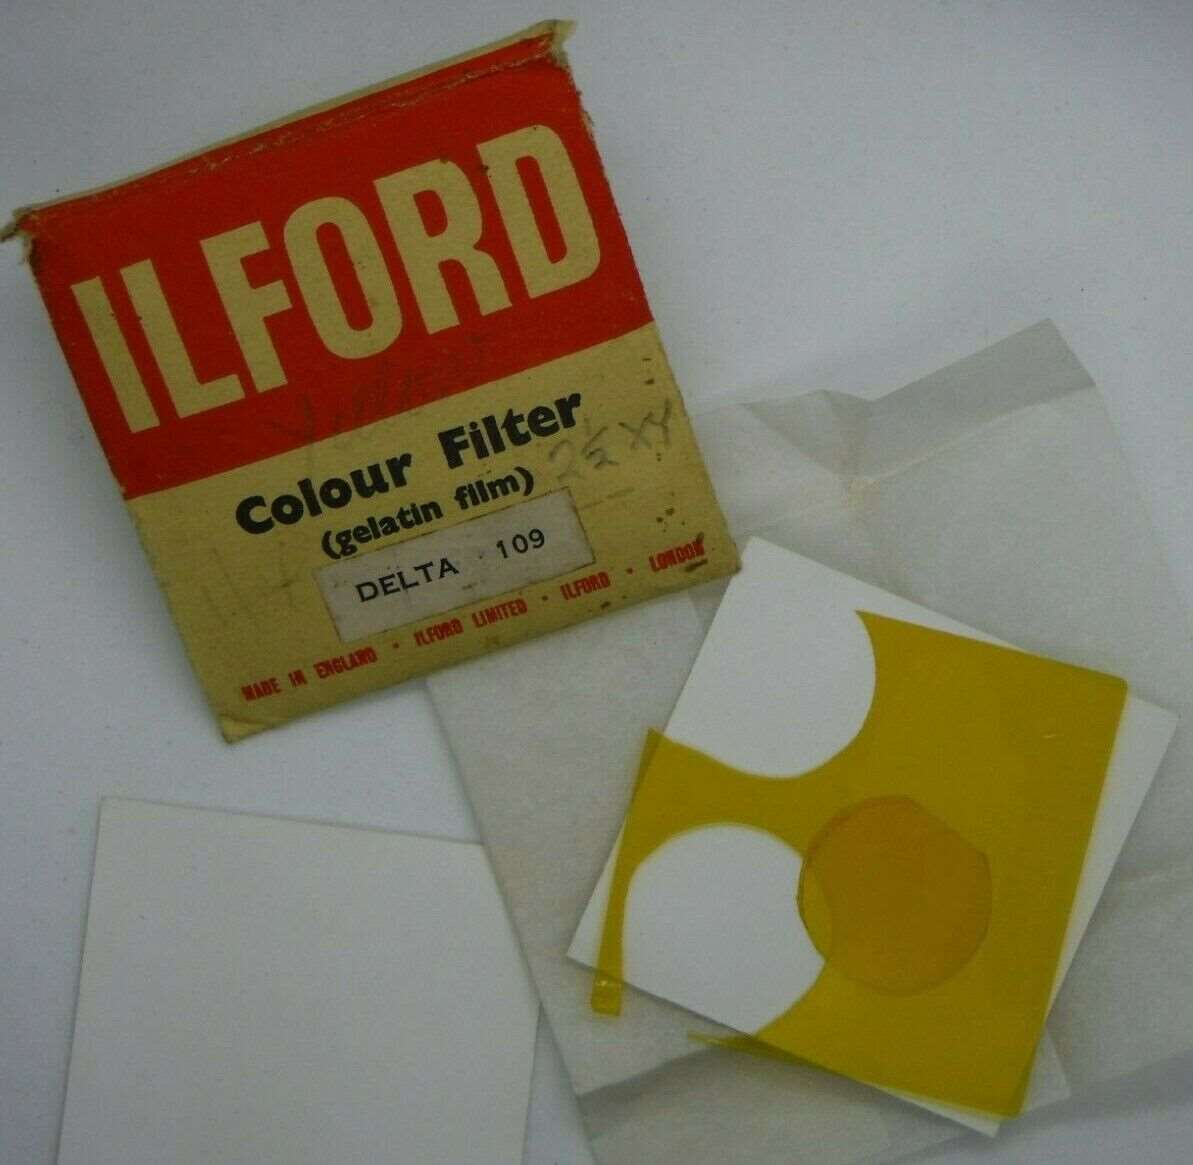 Camera Filter Ilford Delta 109 Gelatin Film Colour Filter in original packaging